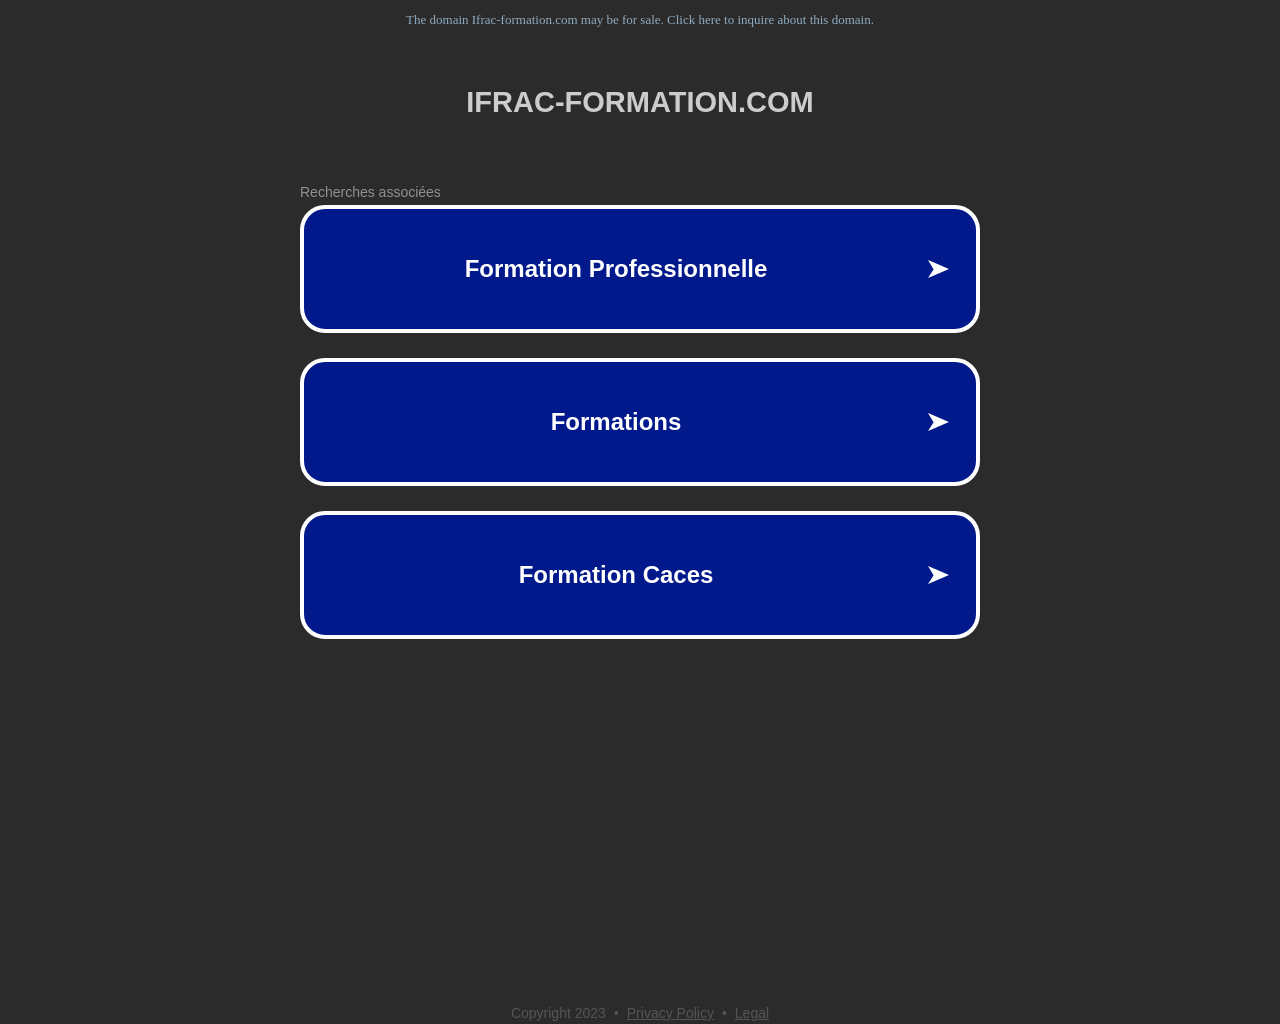 www.ifrac-formation.com